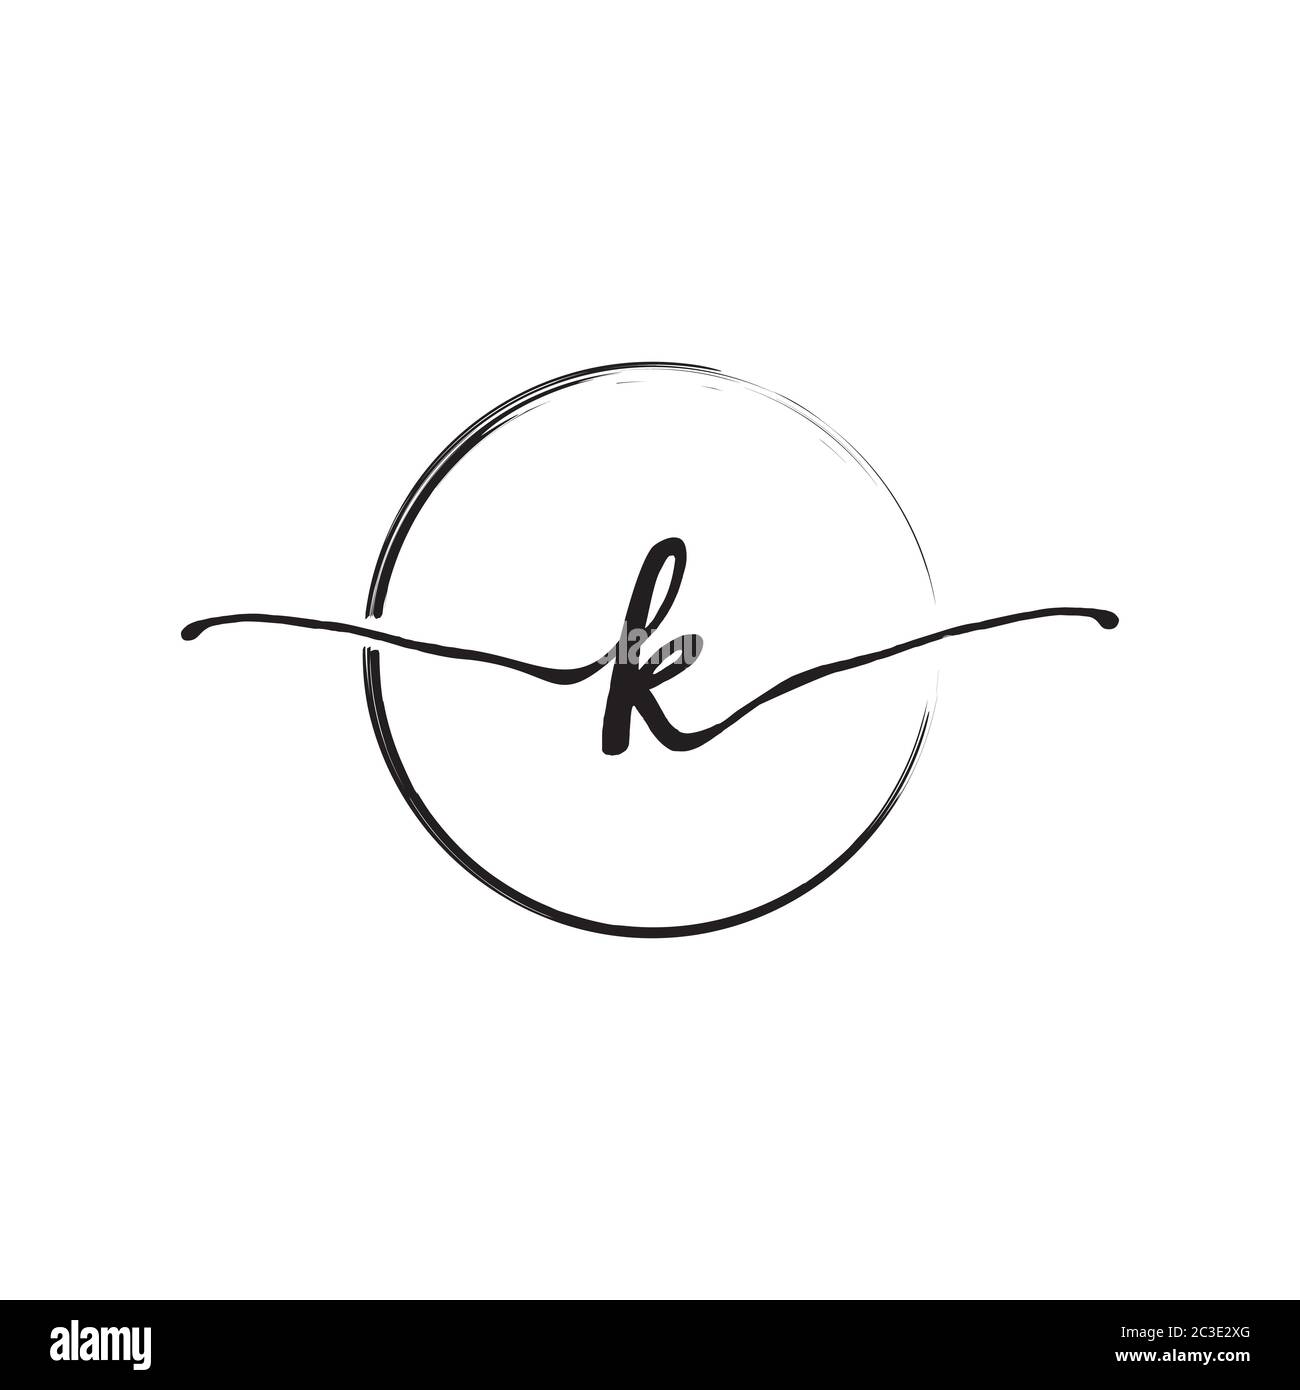 letter K lowercase handwriting wiith circle brush design vector Stock Vector